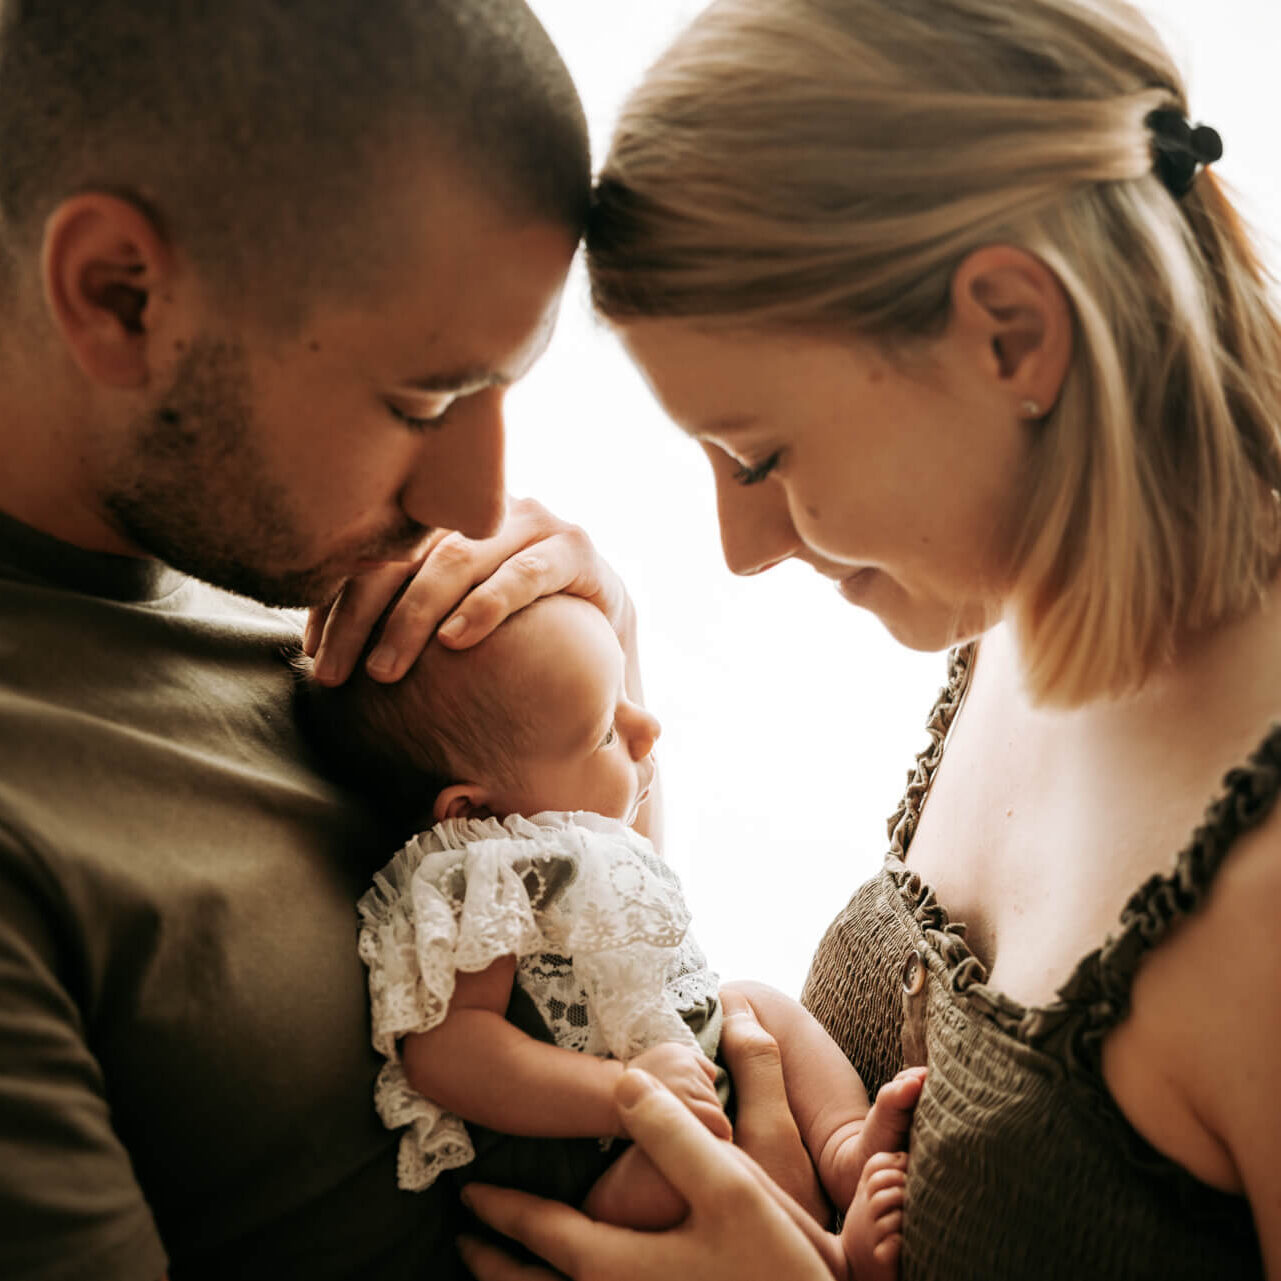 Baby Fotografie Familienfoto Bildgefühle Odenwald